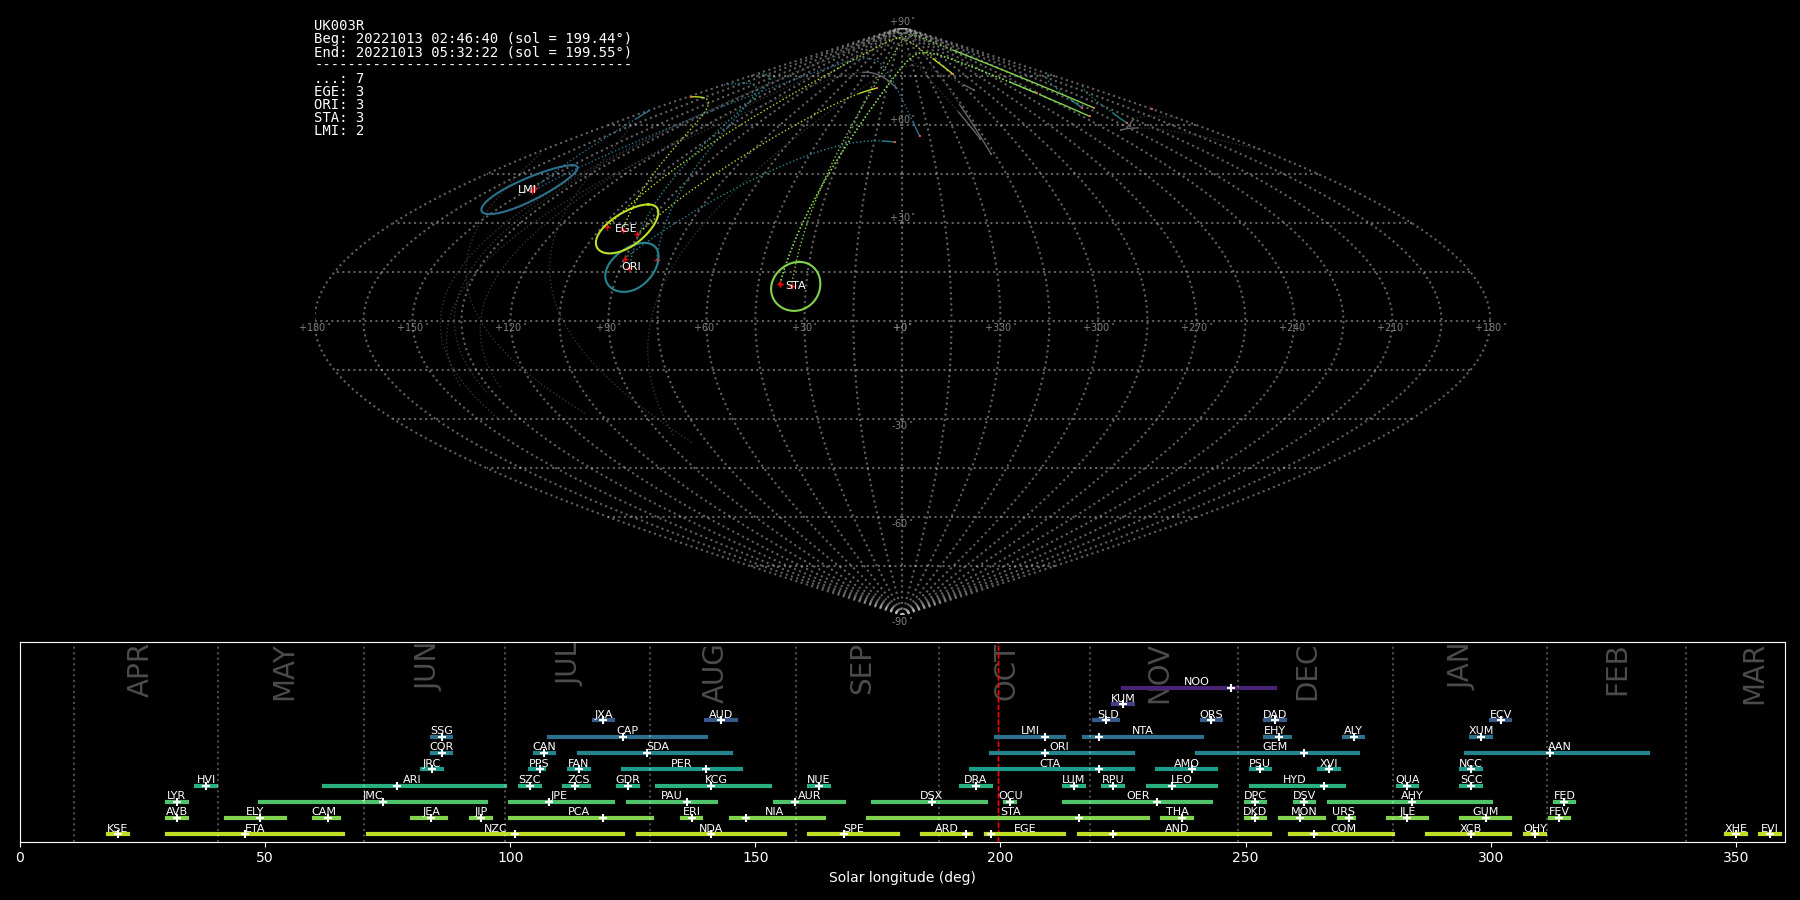 Analysis of meteor radiants